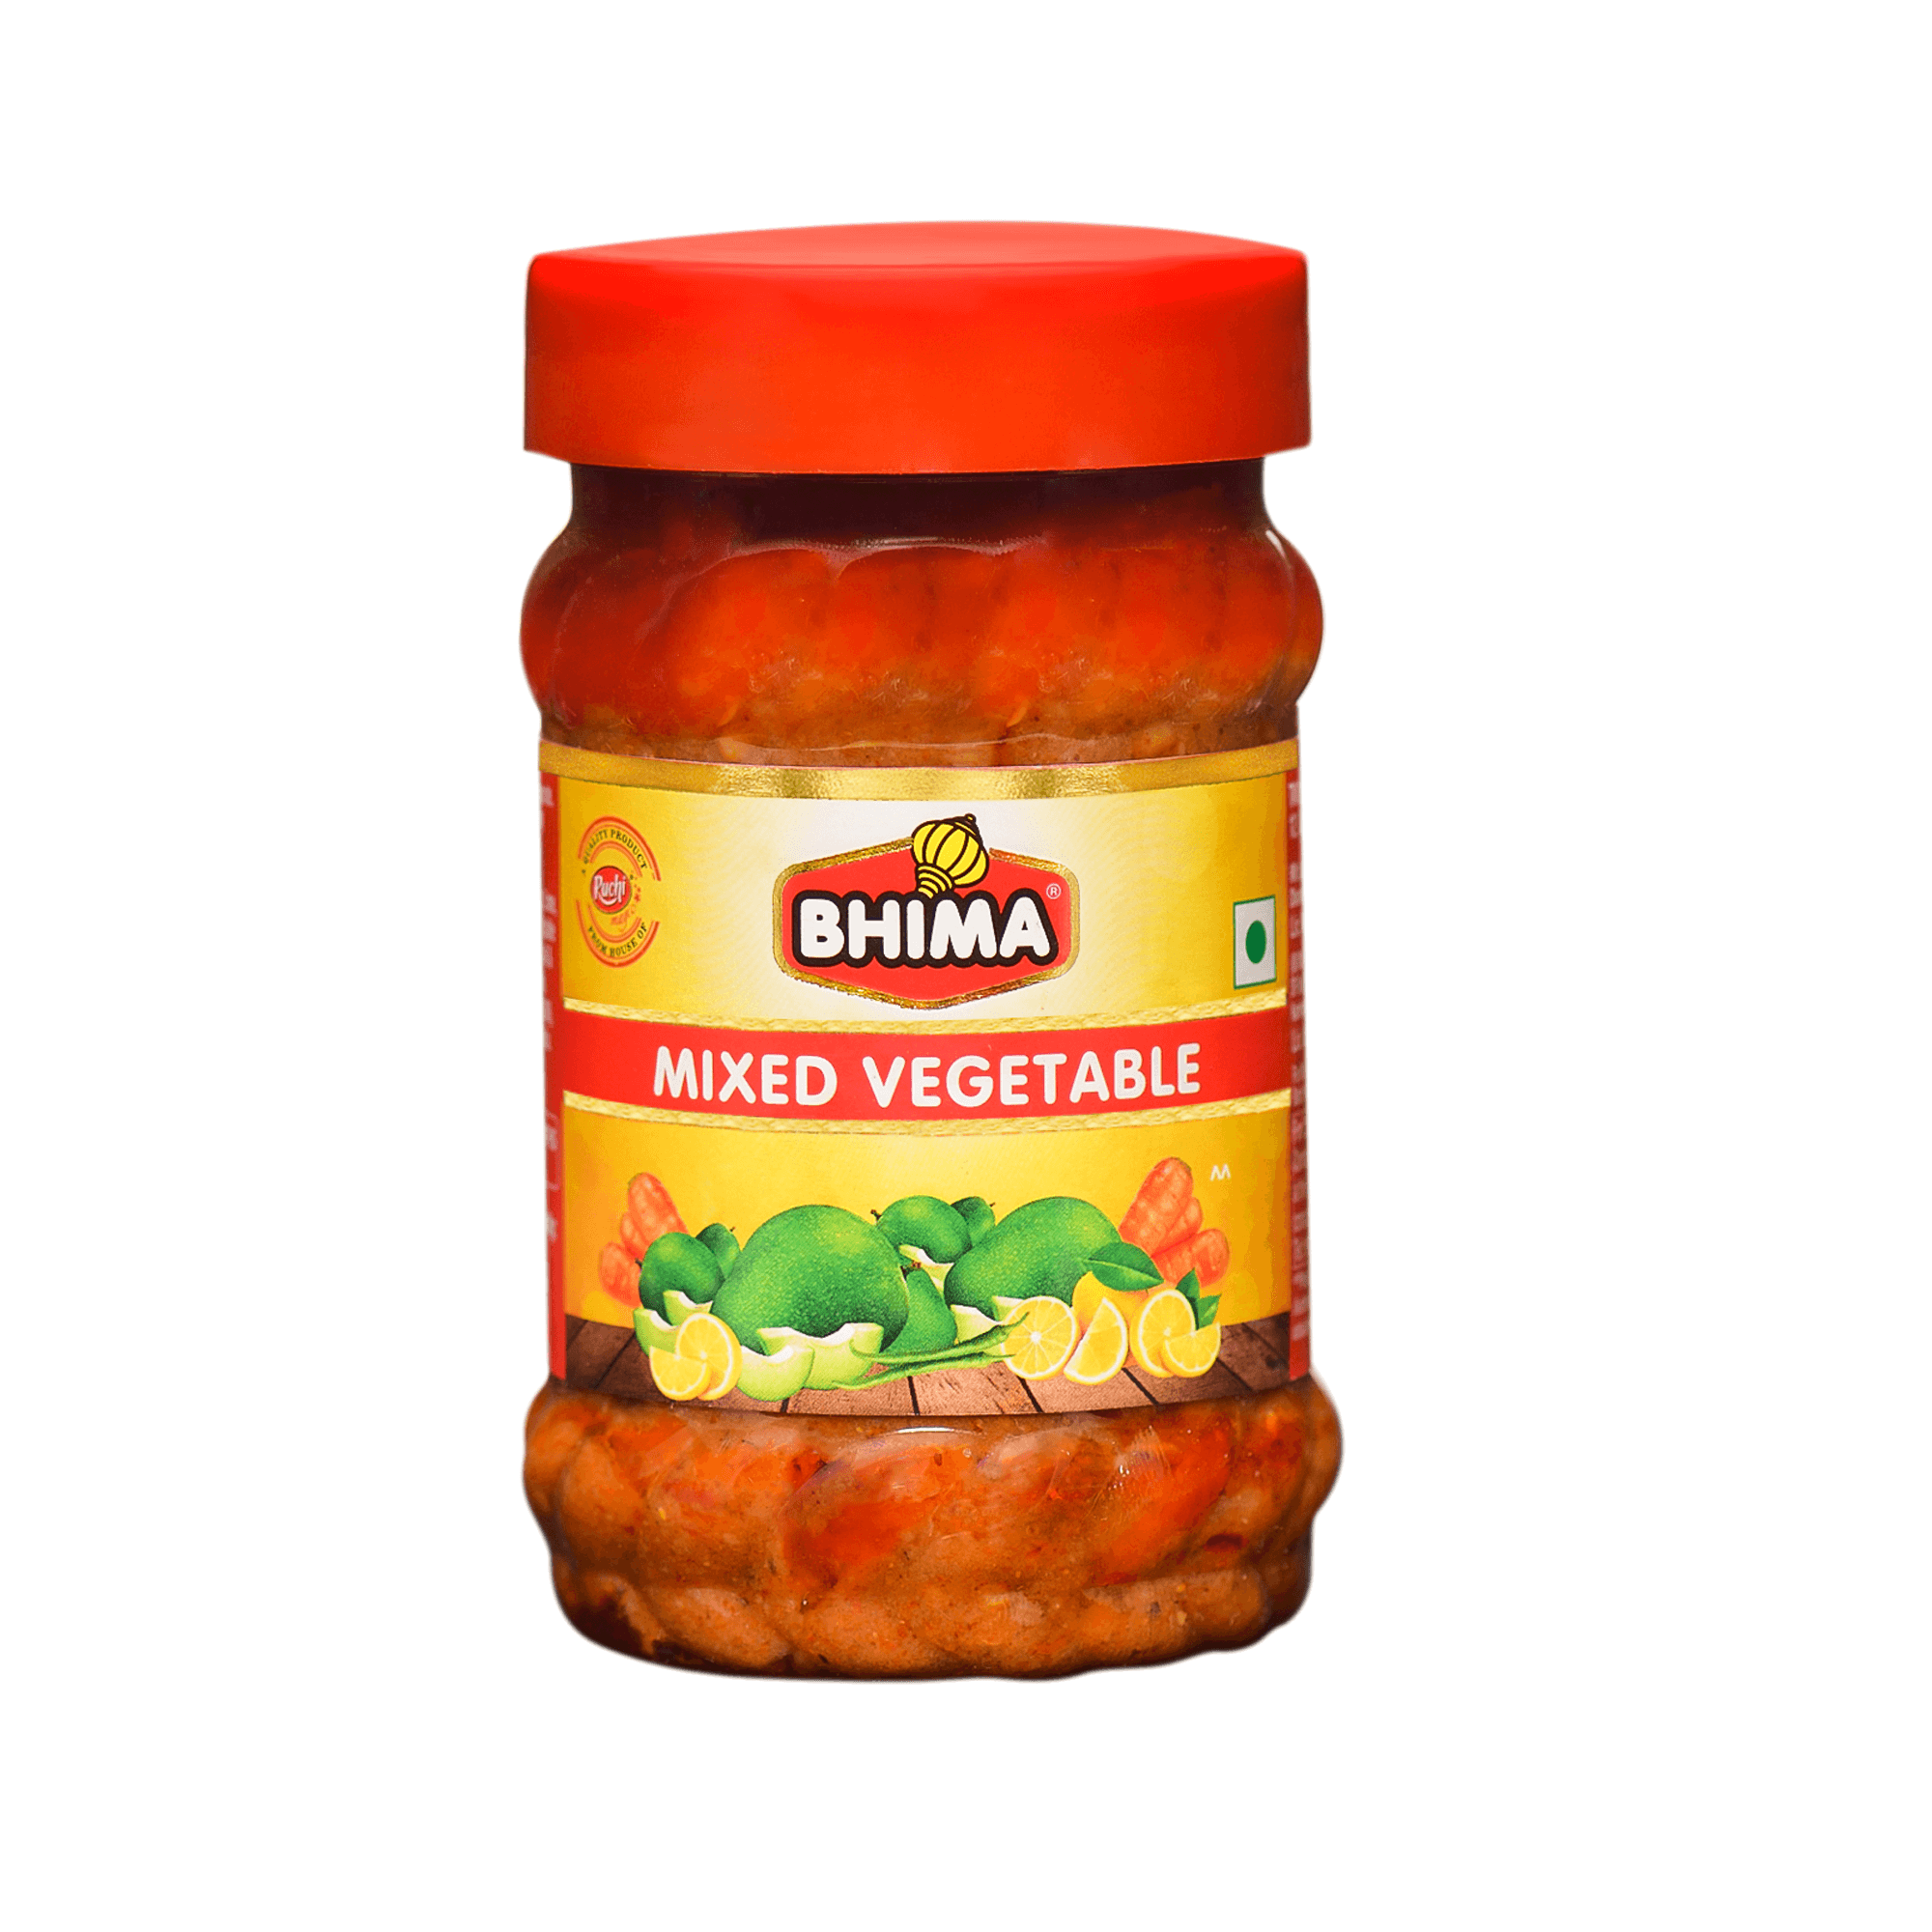 Bhima – Mixed Veg